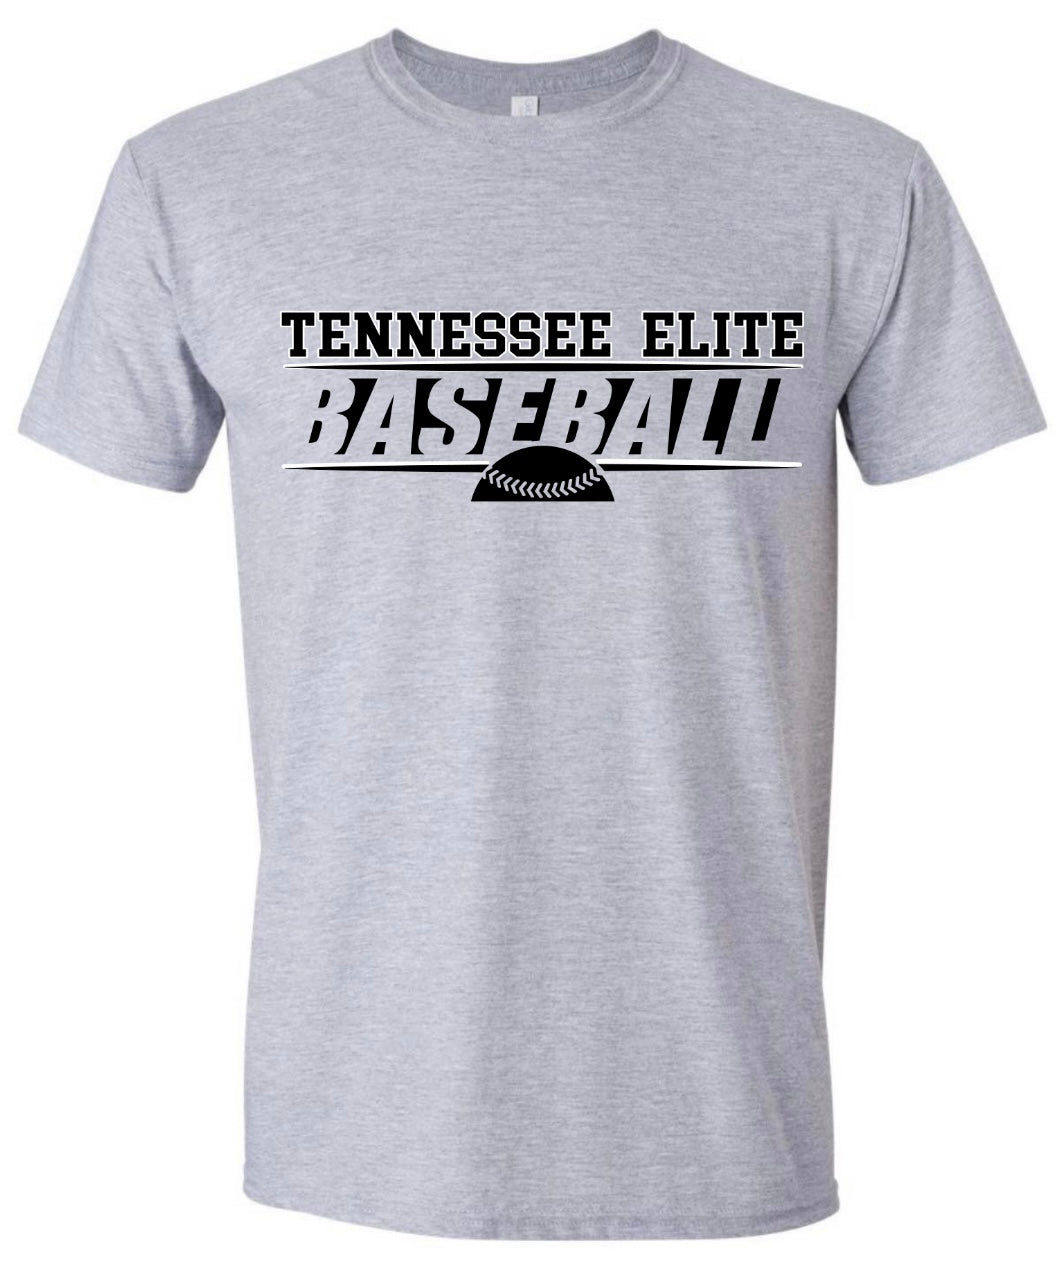 Tennessee Elite Hidden Baseball Tshirt